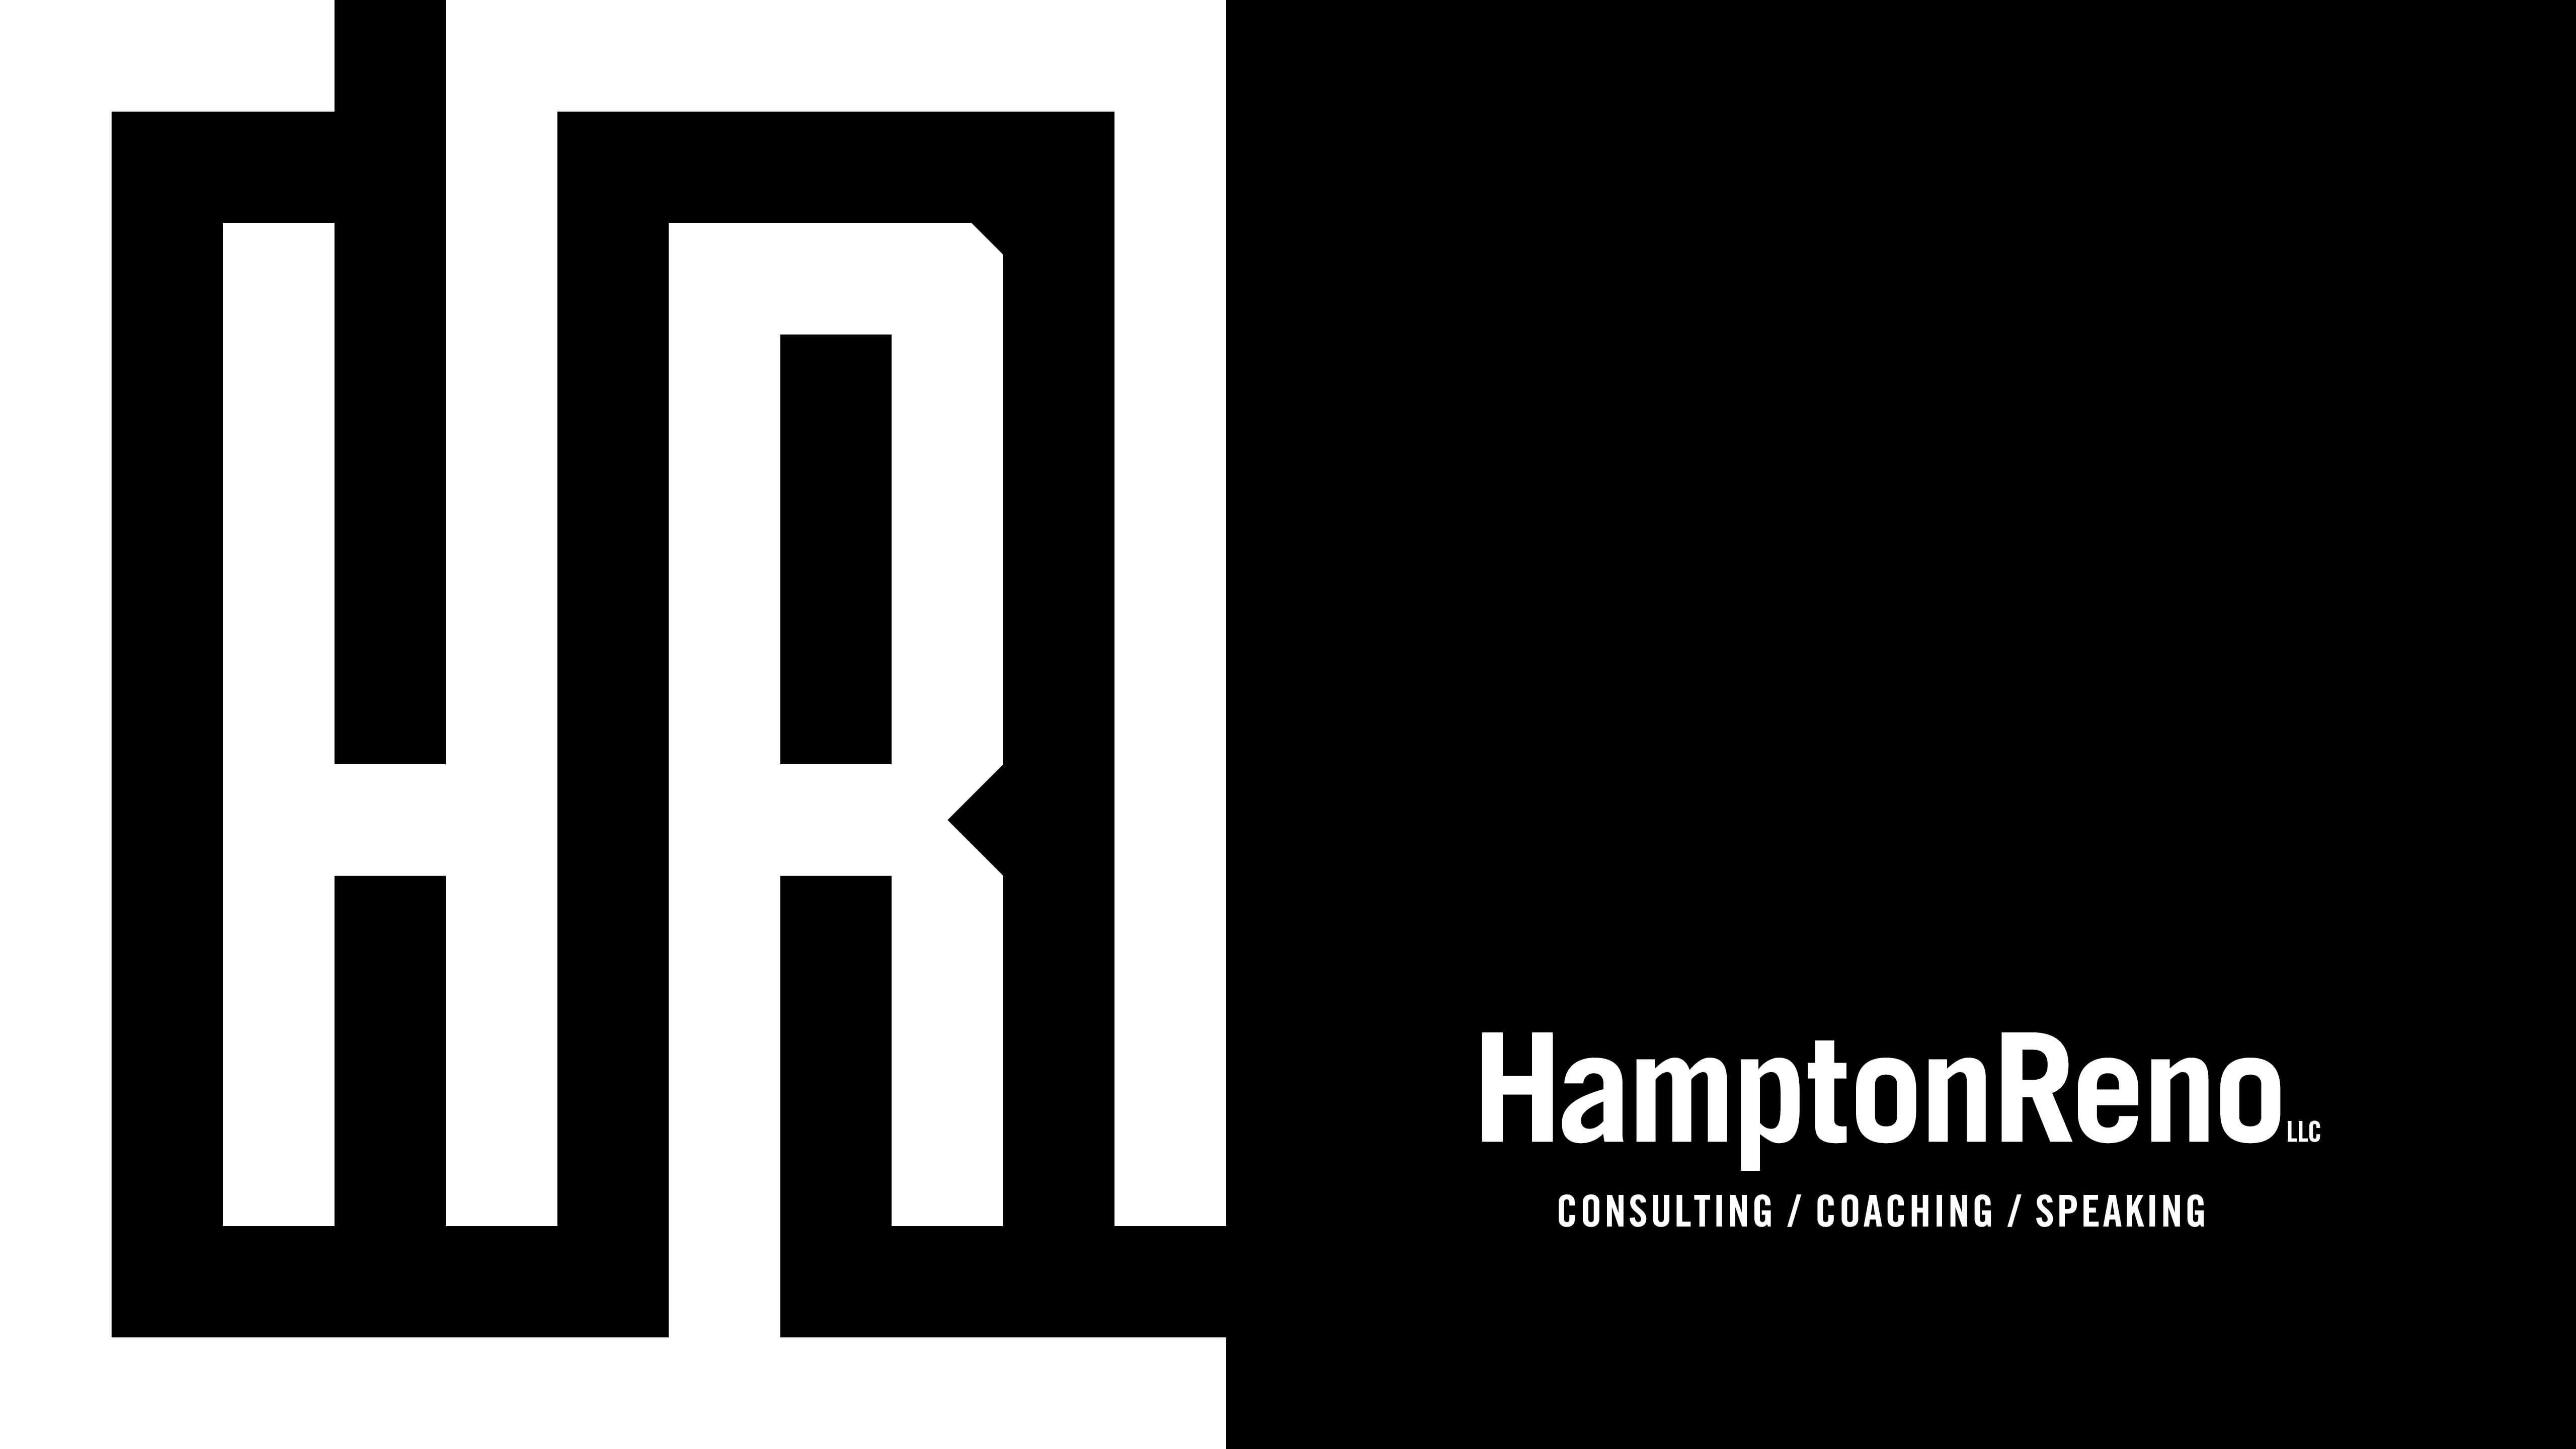 Hampton Reno | Consulting, Coaching, Speaking | Branding